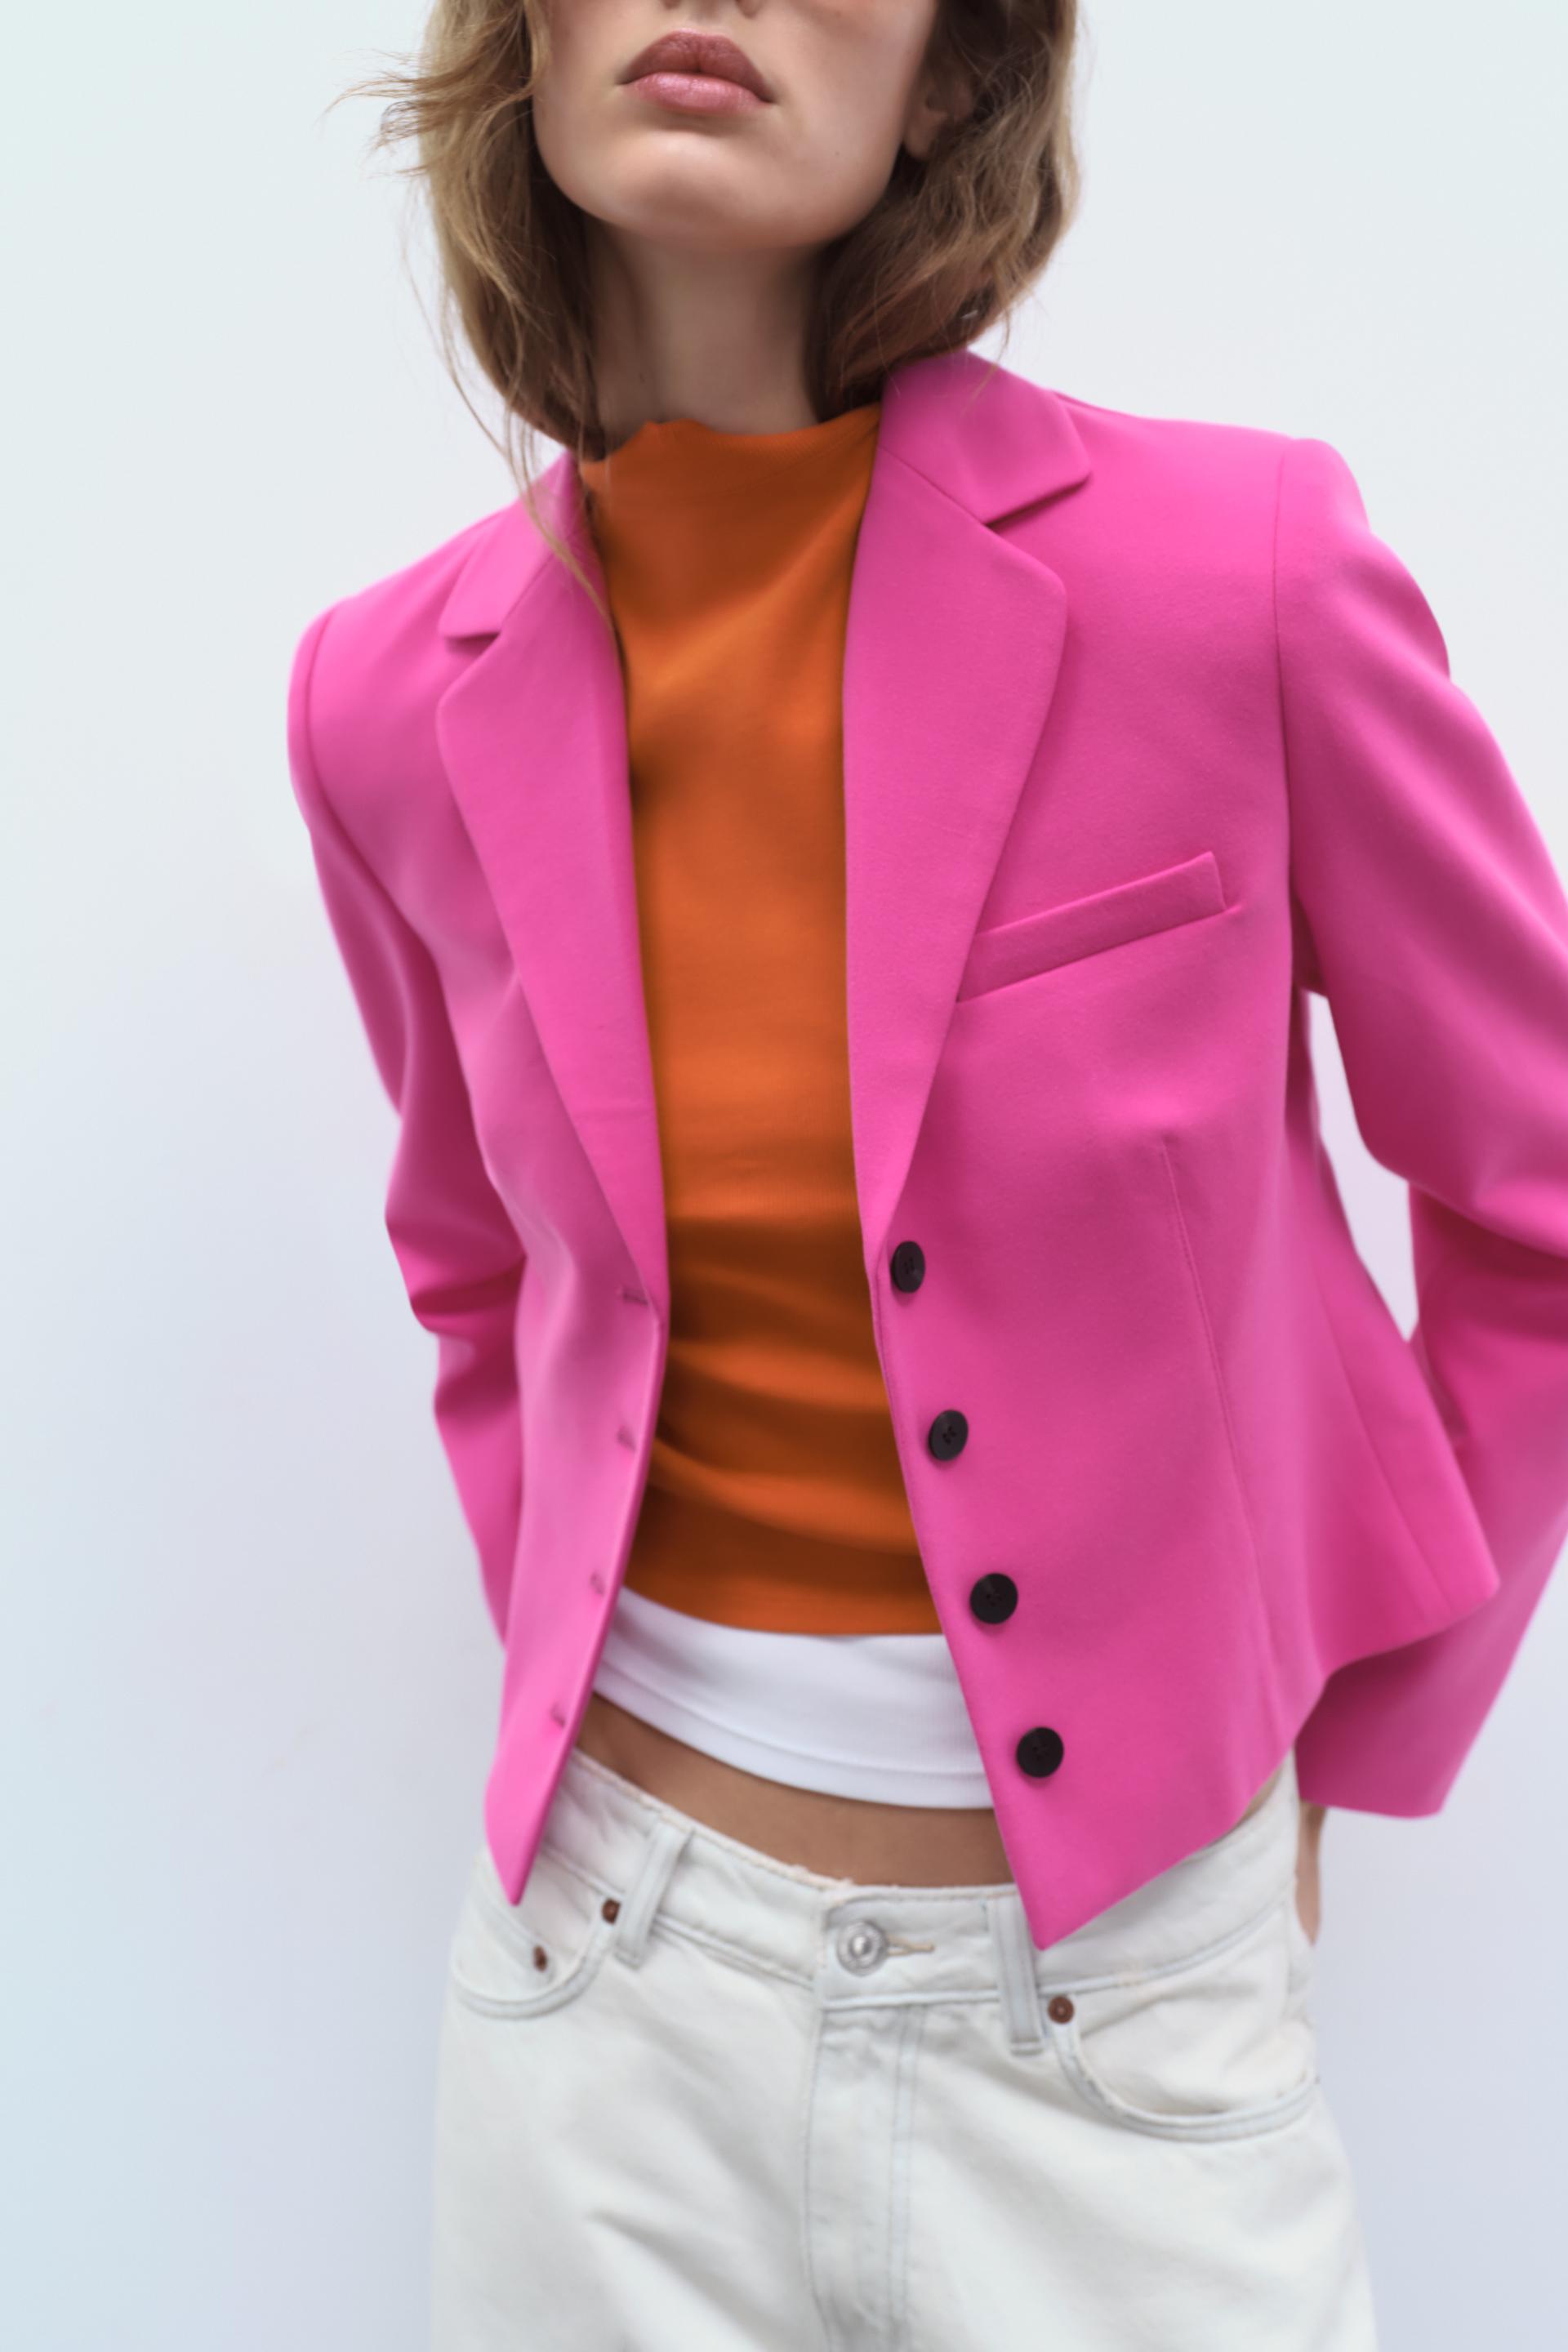 100% Authentic ZARA Fuchsia Pink Blazer with Tuxedo Collar $119+Tax Size:  XS